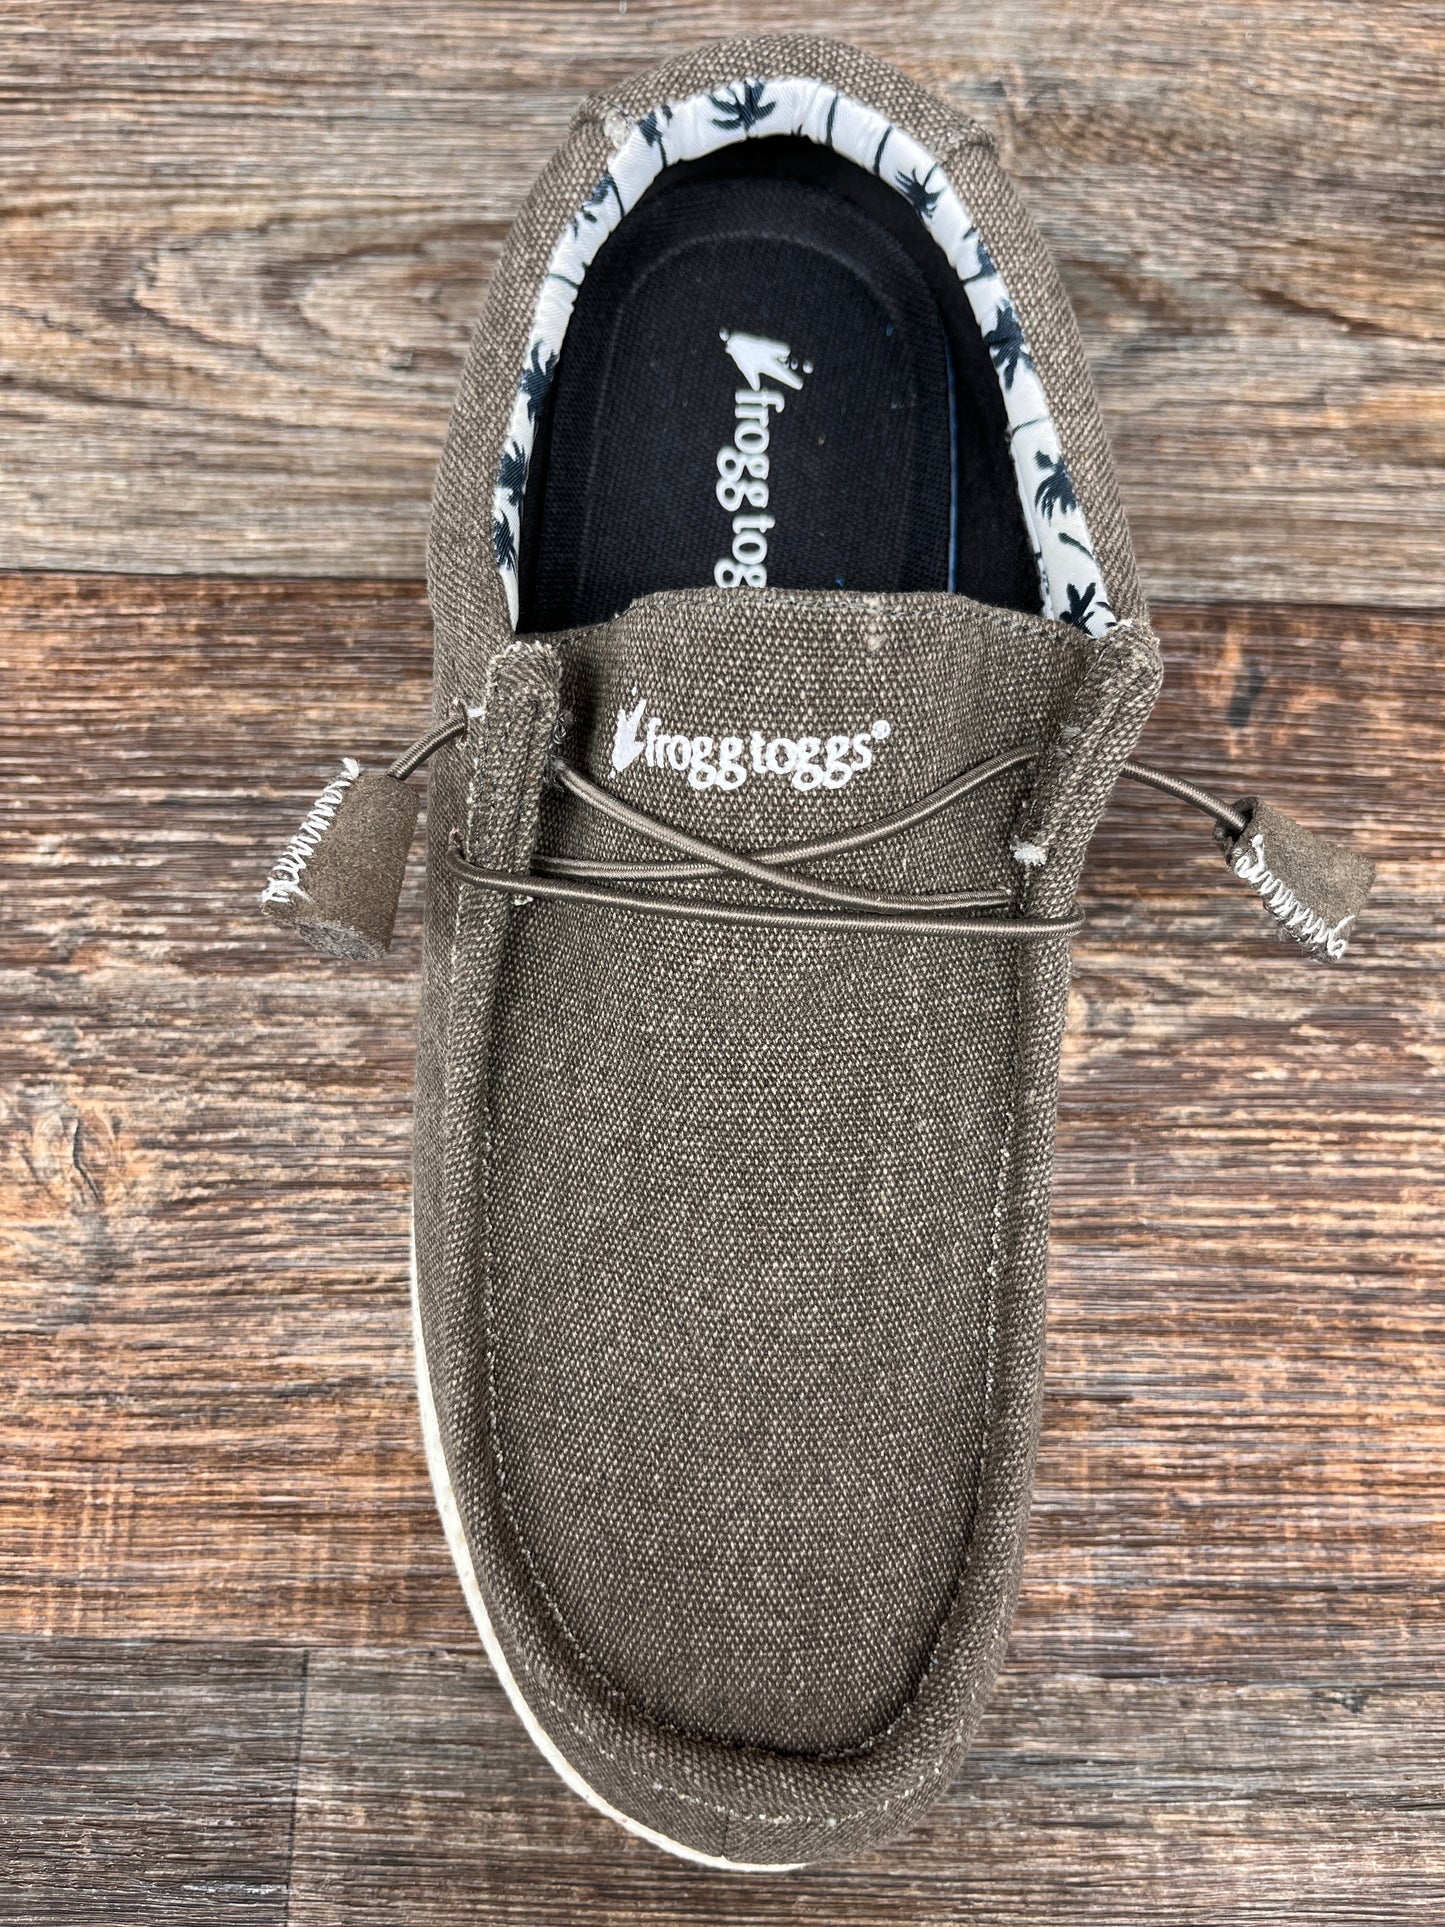 111318-de Men's Brown Java Lace Up Waterproof Casual Shoe by Frogg Toggs